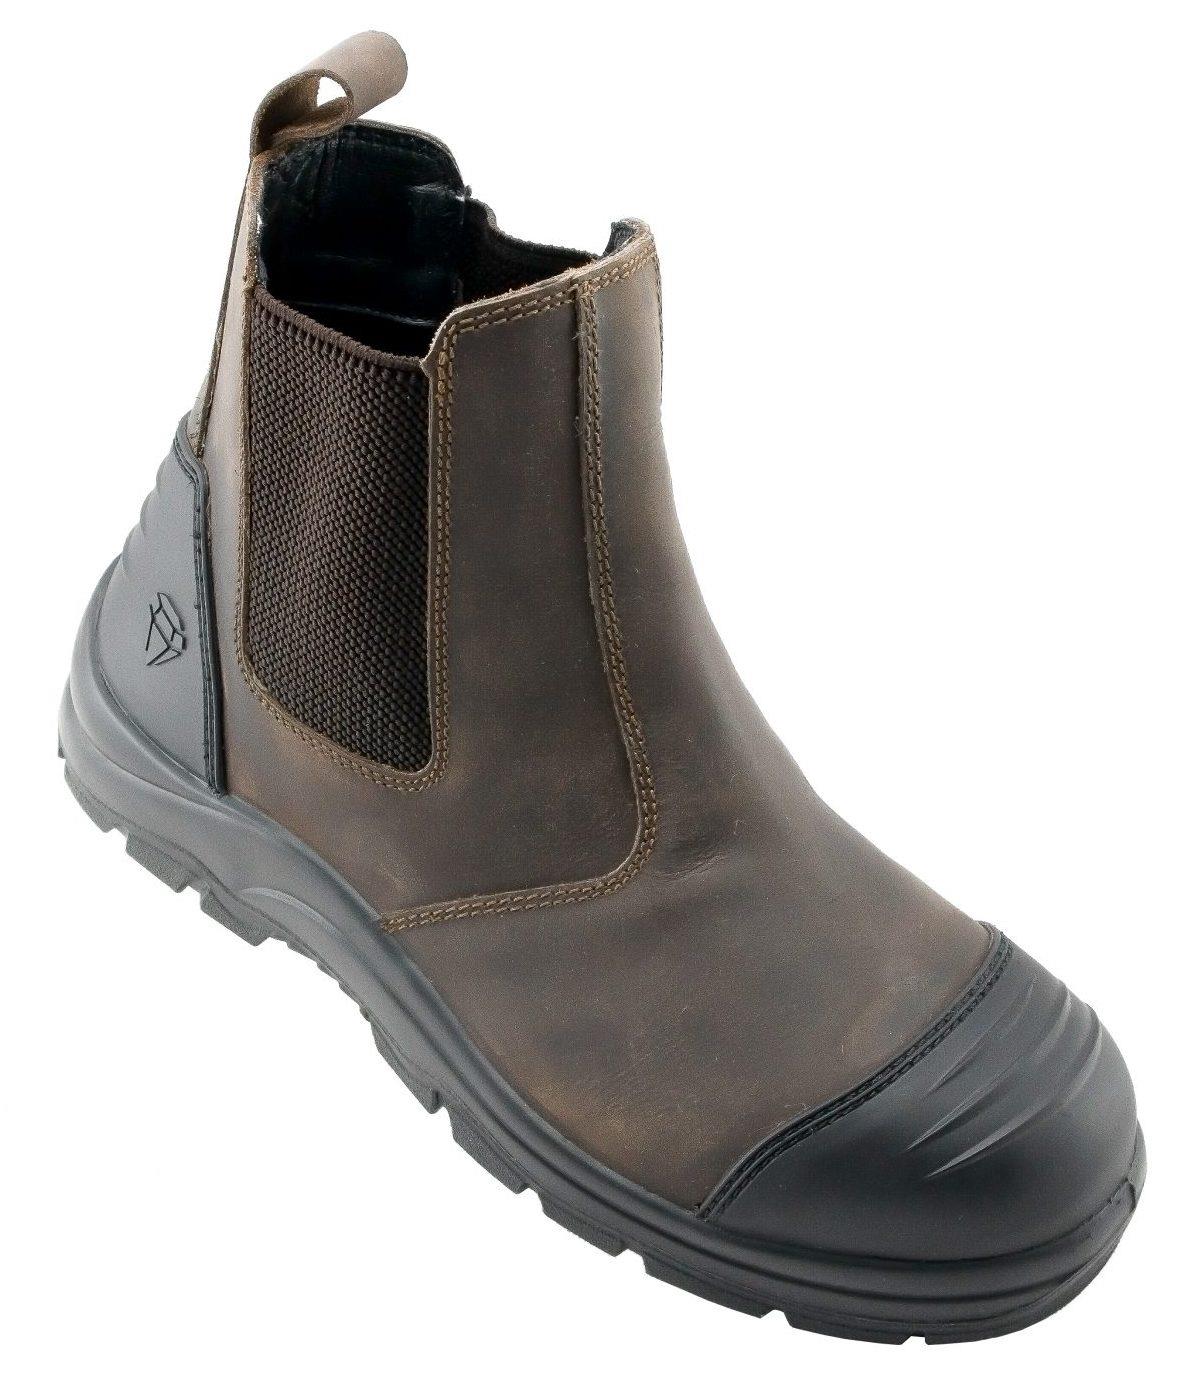 Unbreakable Granite S3 SRC composite toe/midsole brown safety dealer boot